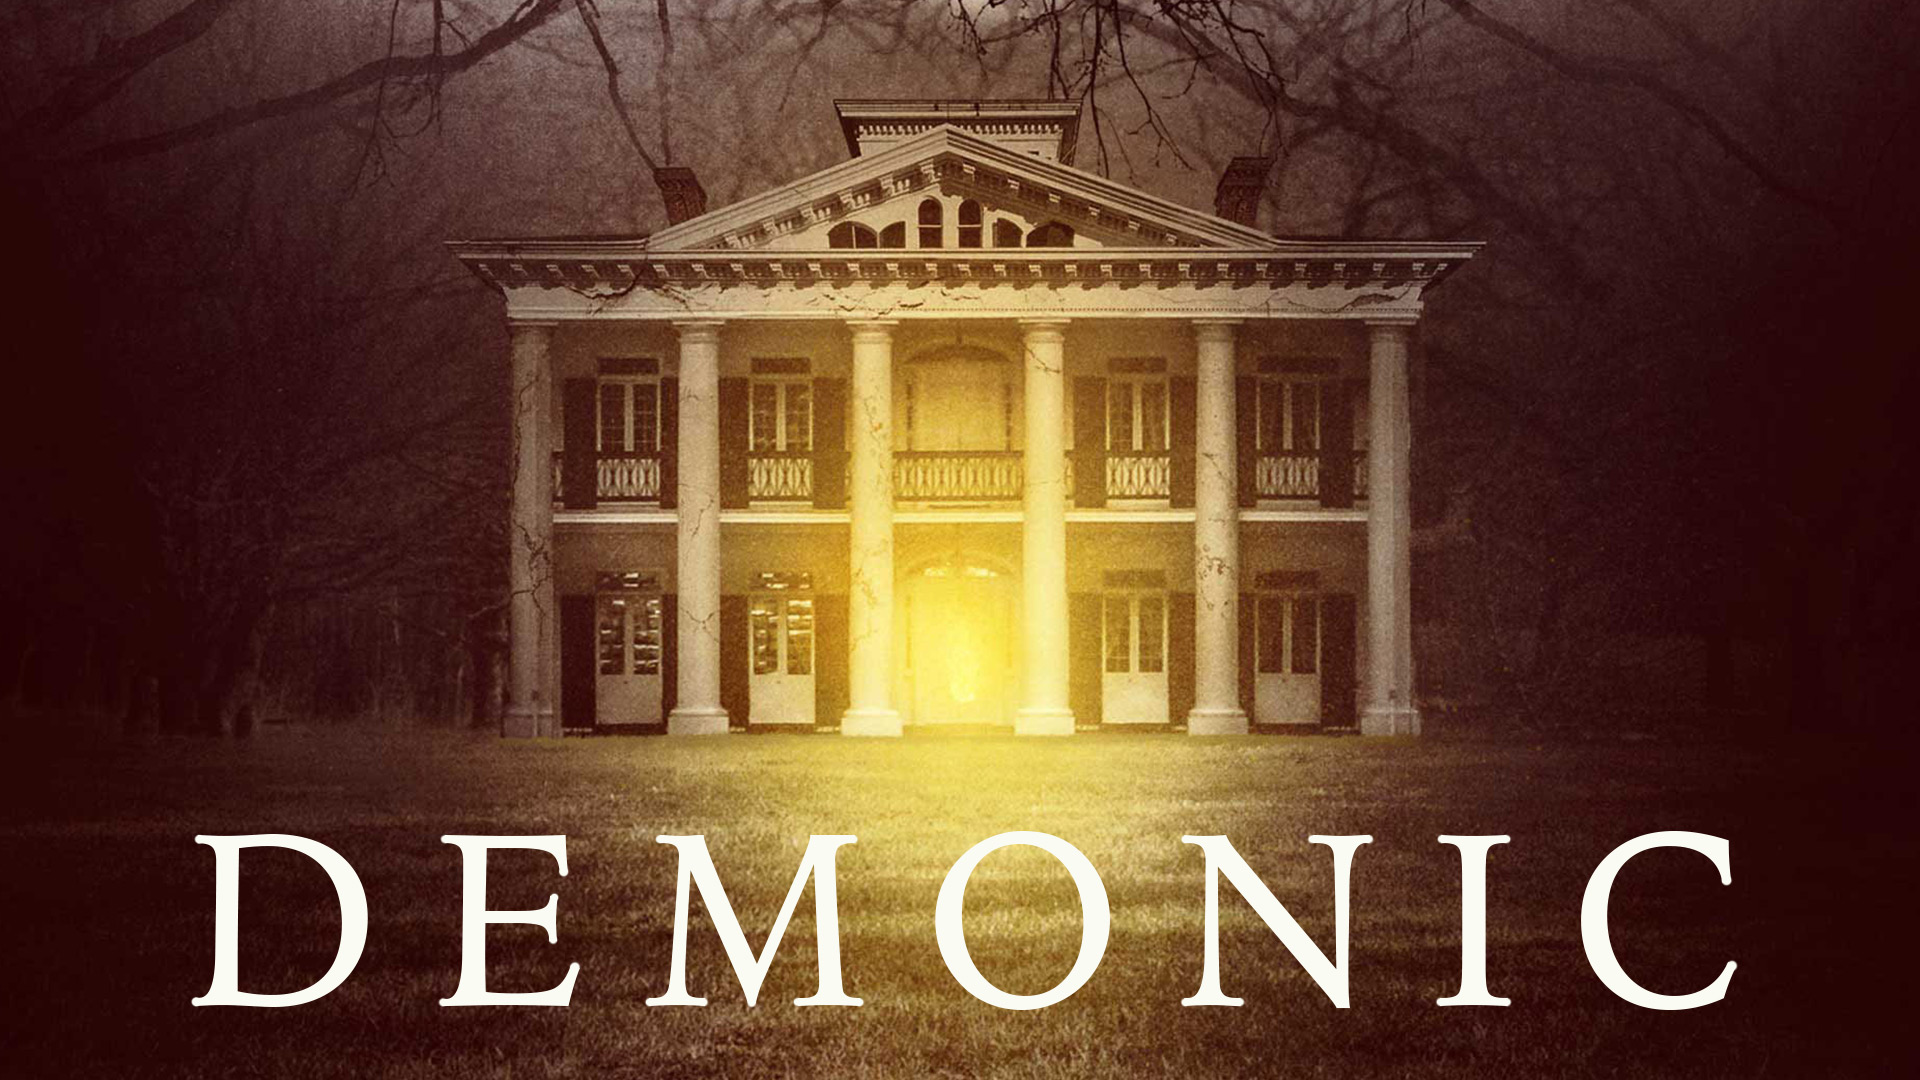 Ngôi Nhà Ma – Demonicc (2015) Full HD Vietsub